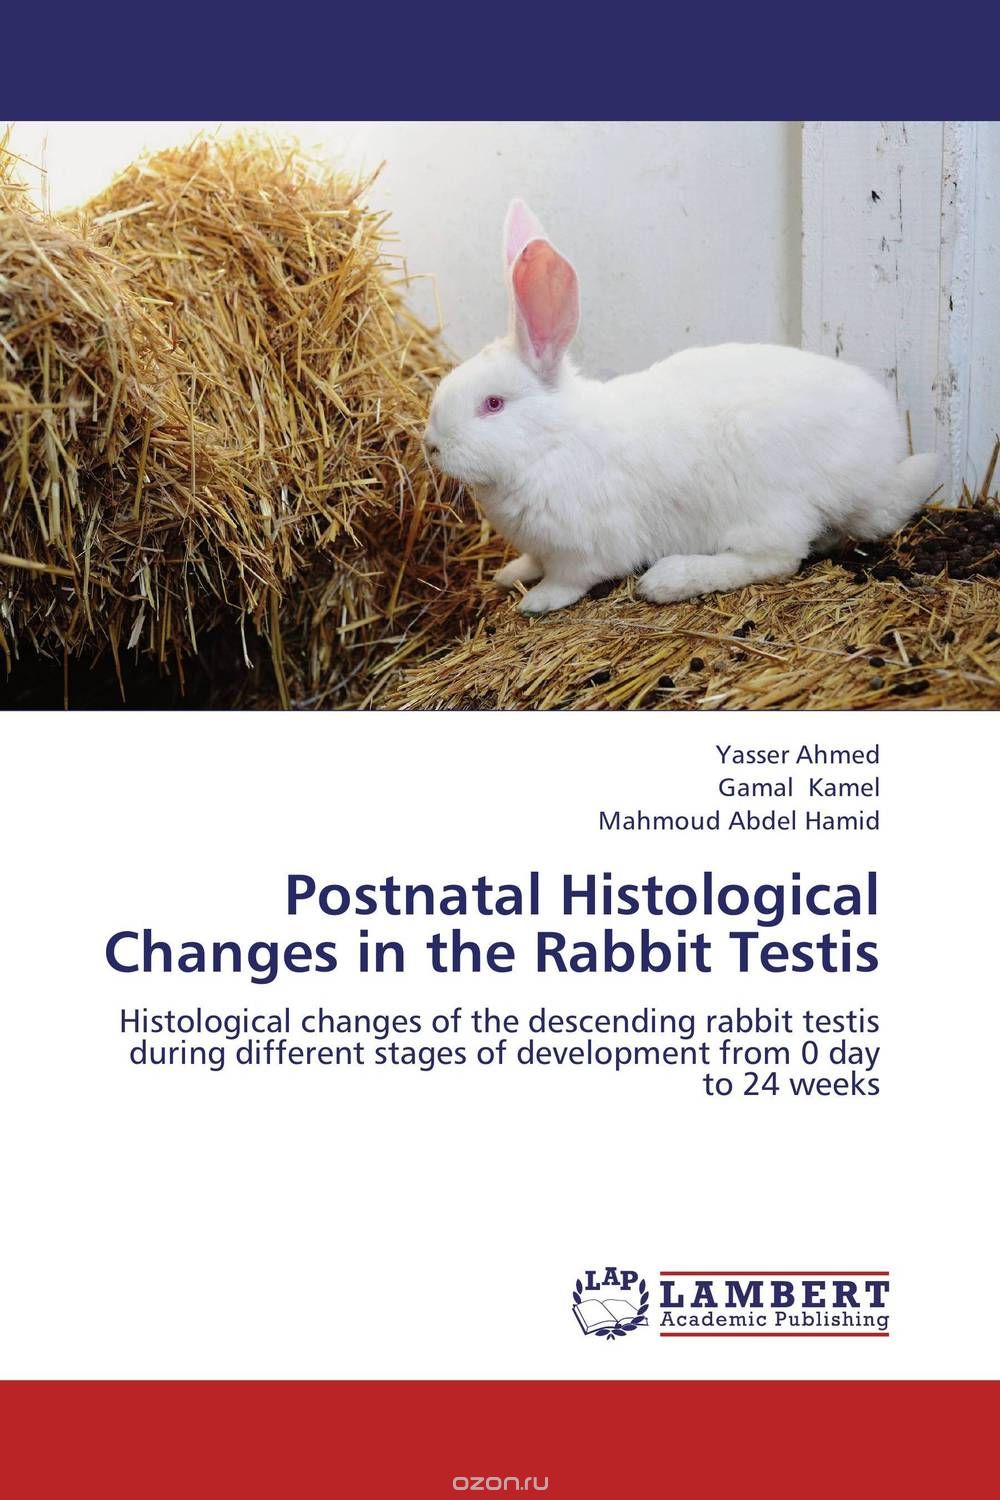 Скачать книгу "Postnatal Histological Changes in the Rabbit Testis"